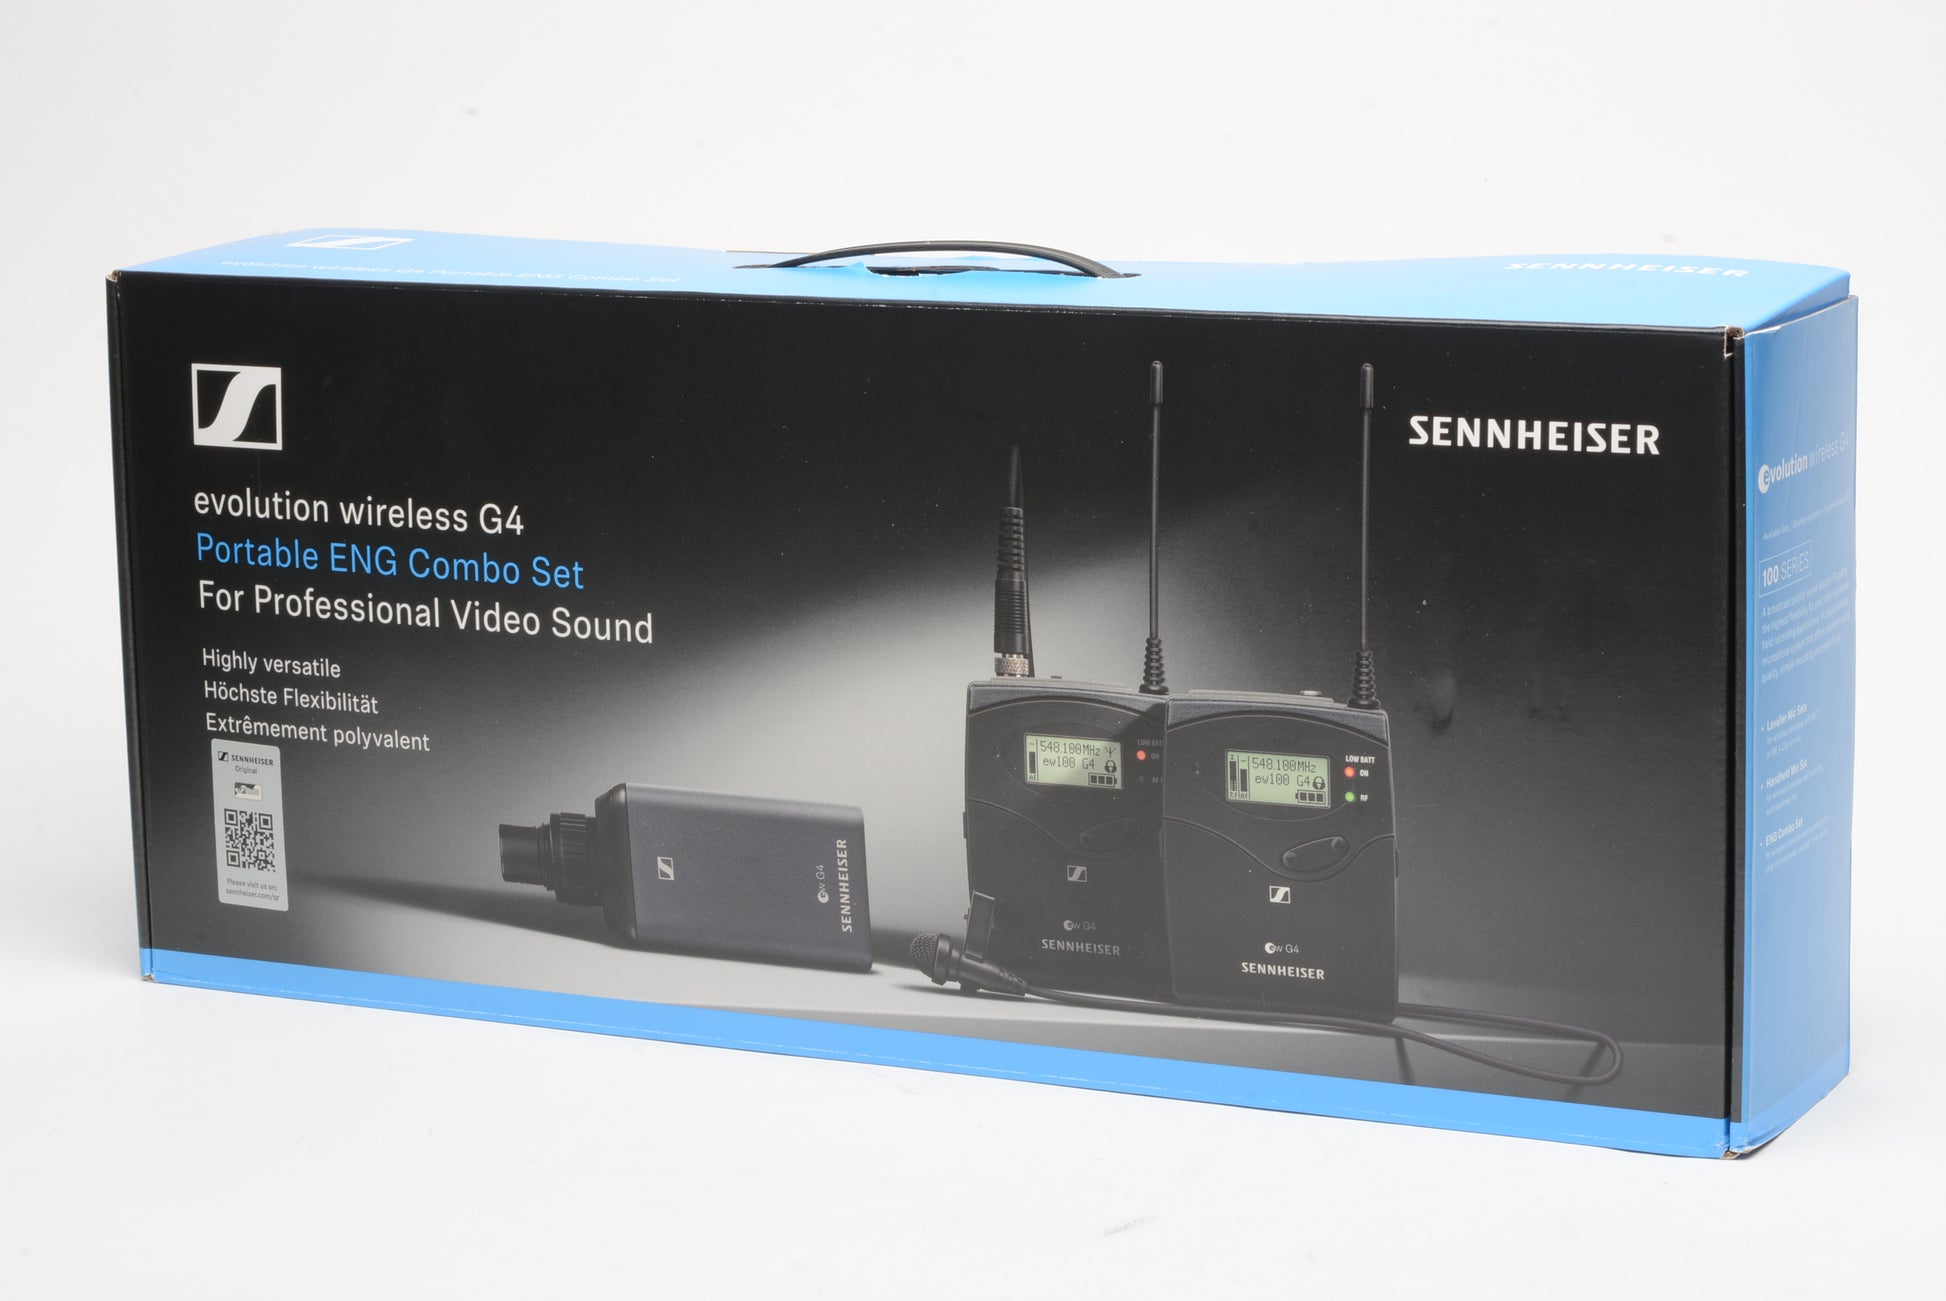 evolution wireless G4 broadcast - Sennheiser